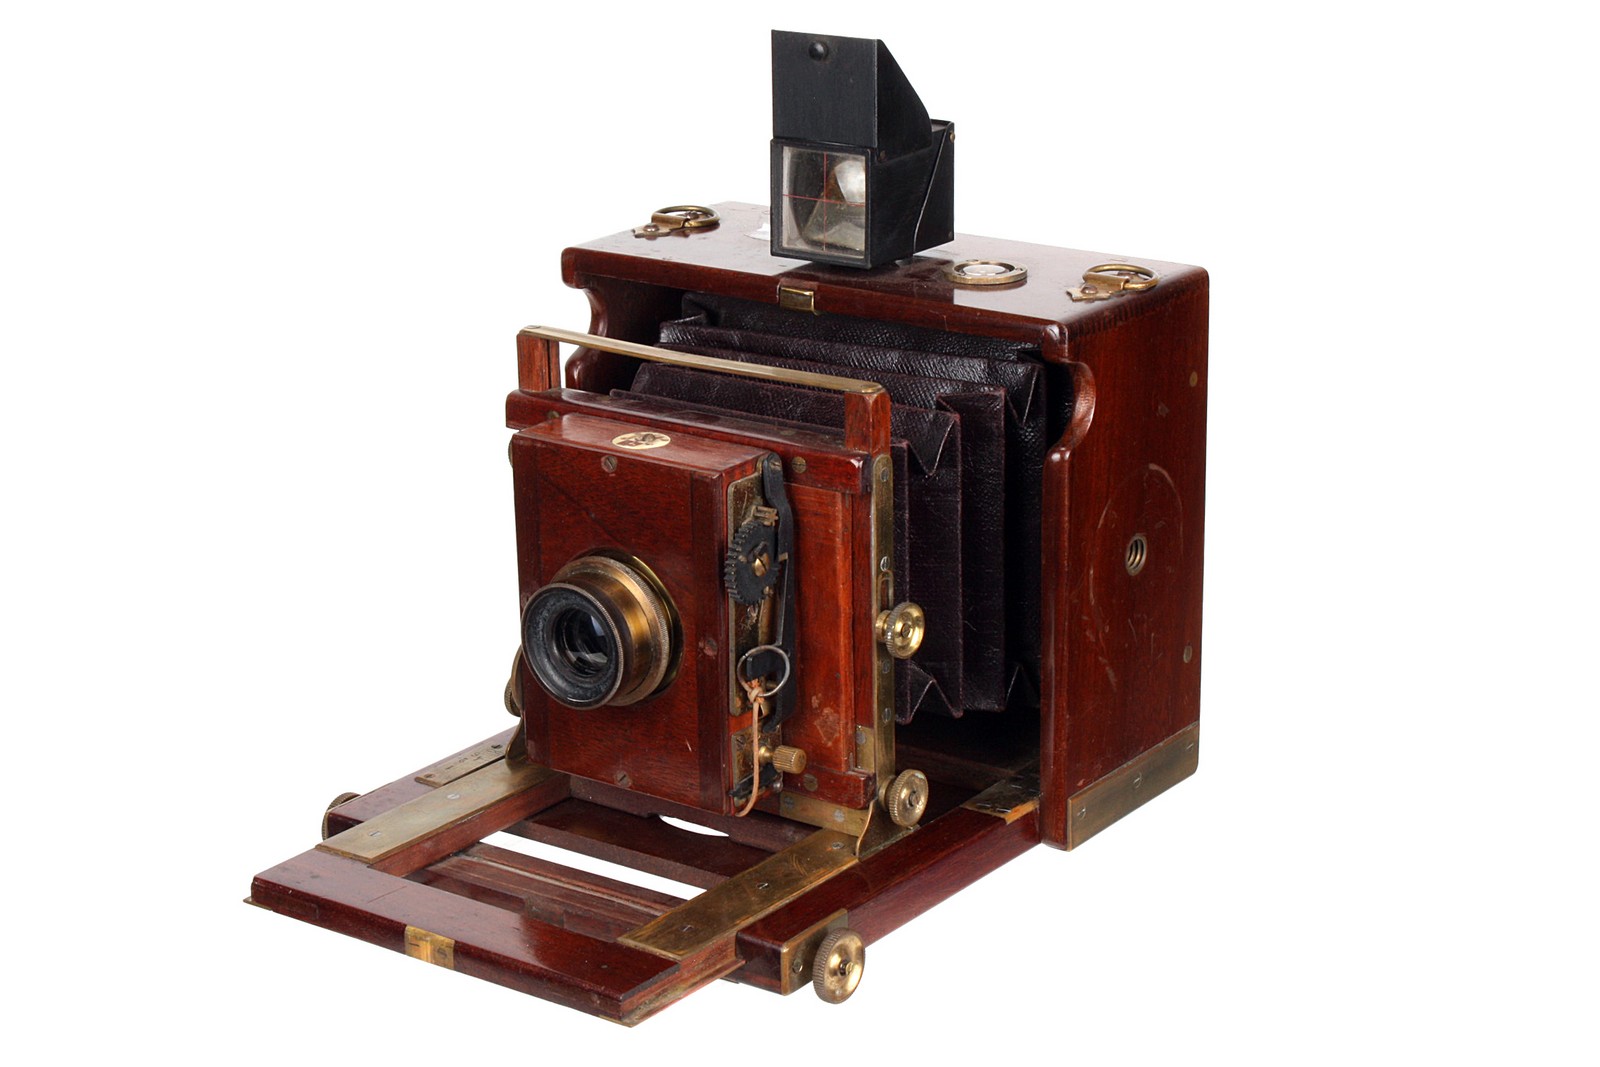 An Unmarked Mahogany Box Camera, German, 4x5”, with C. P. Goerz Doppel-Anastigmat Series III f/6